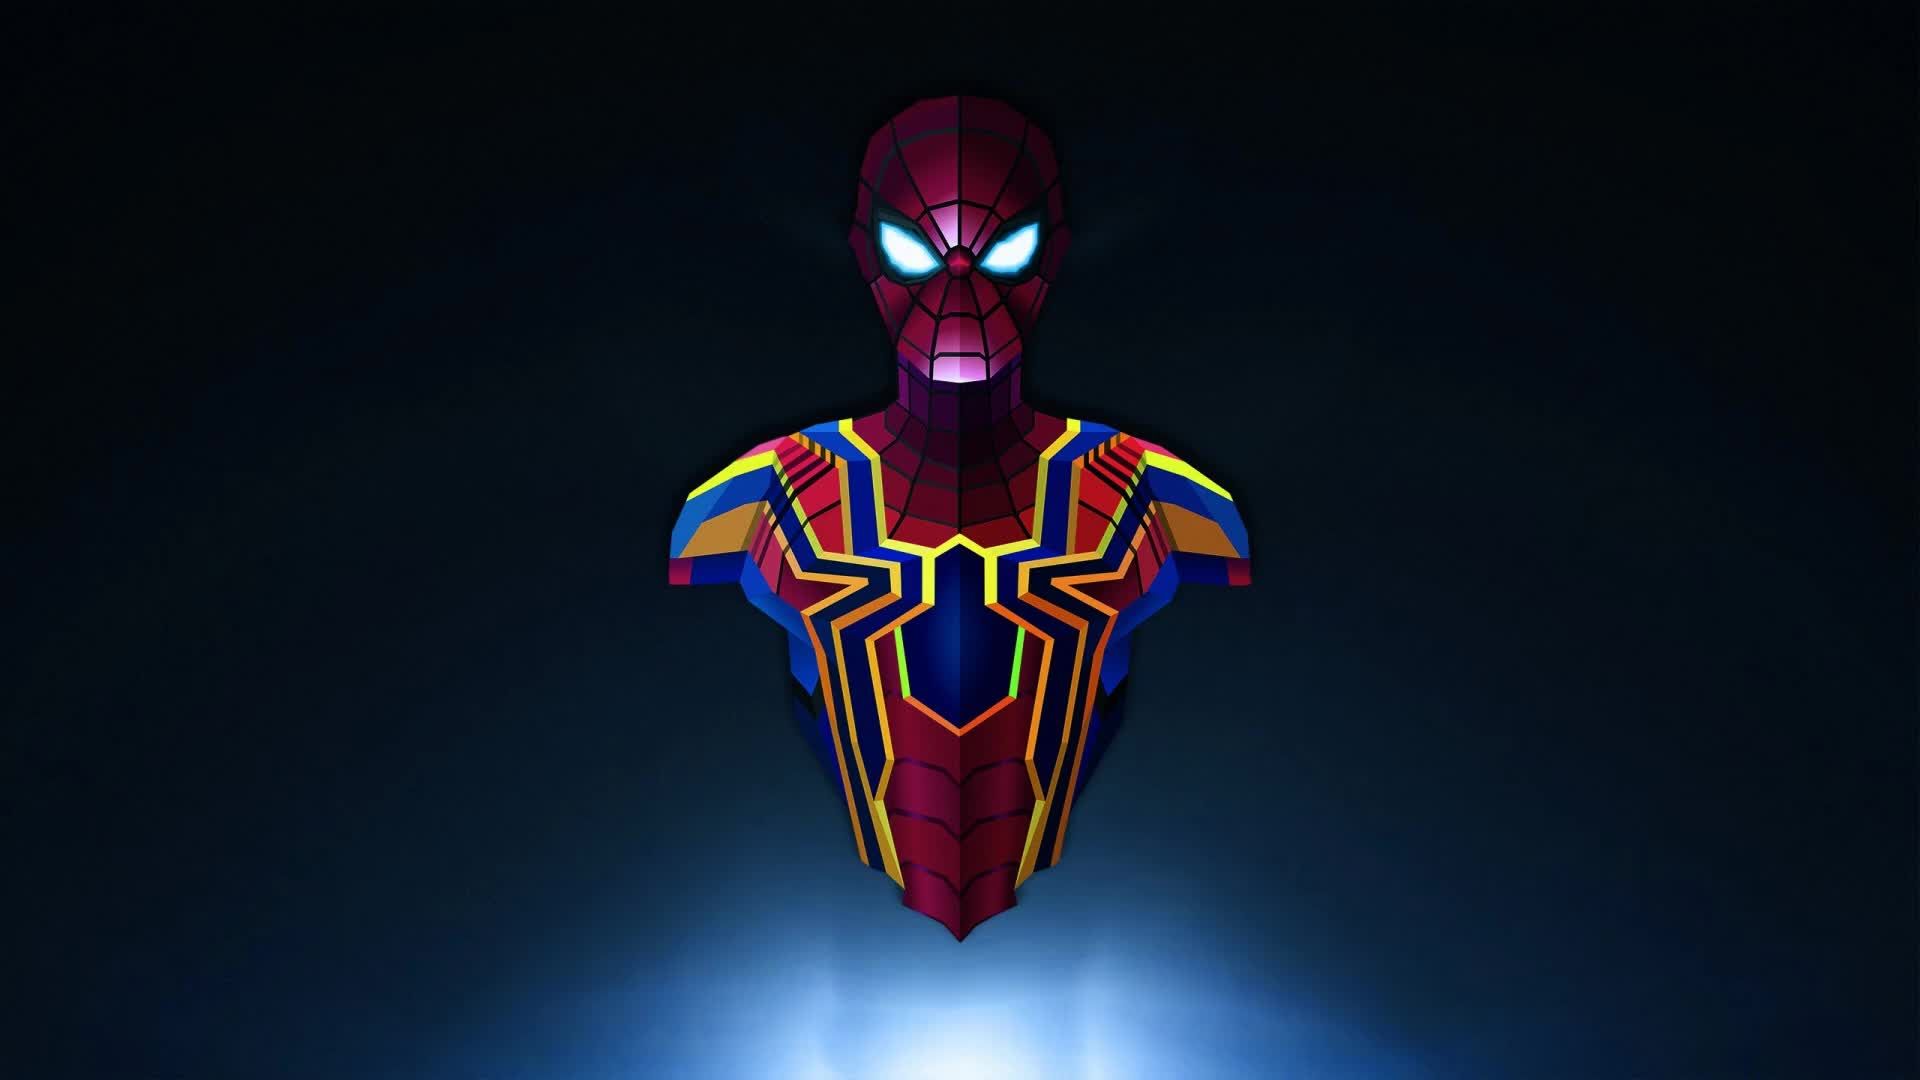 Spider Man Infinity War Wallpapers